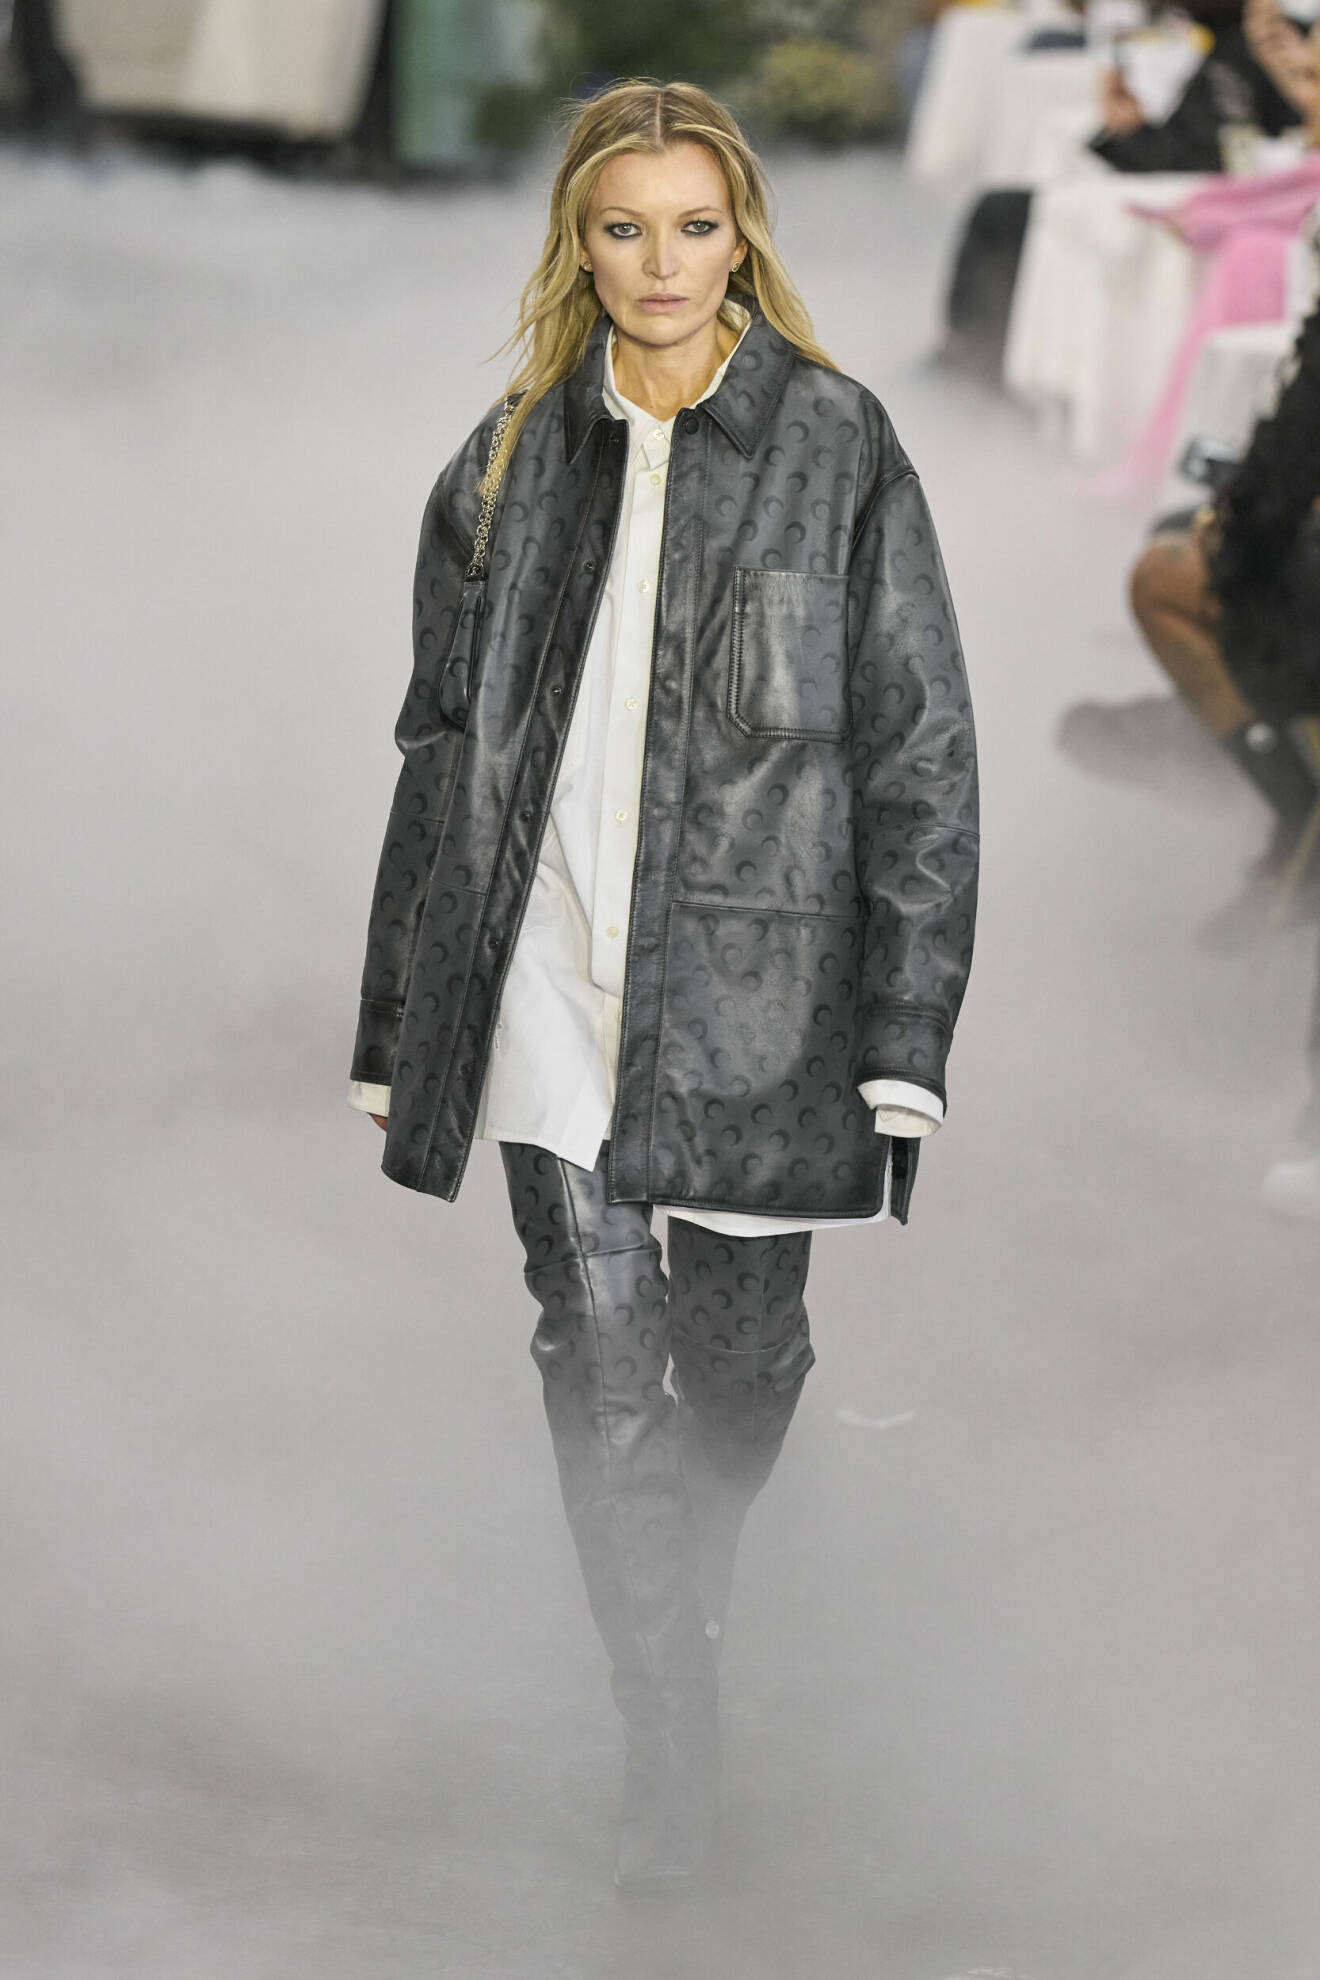 Kate Moss-kopian Denise Ohnana på Paris Fashion Week